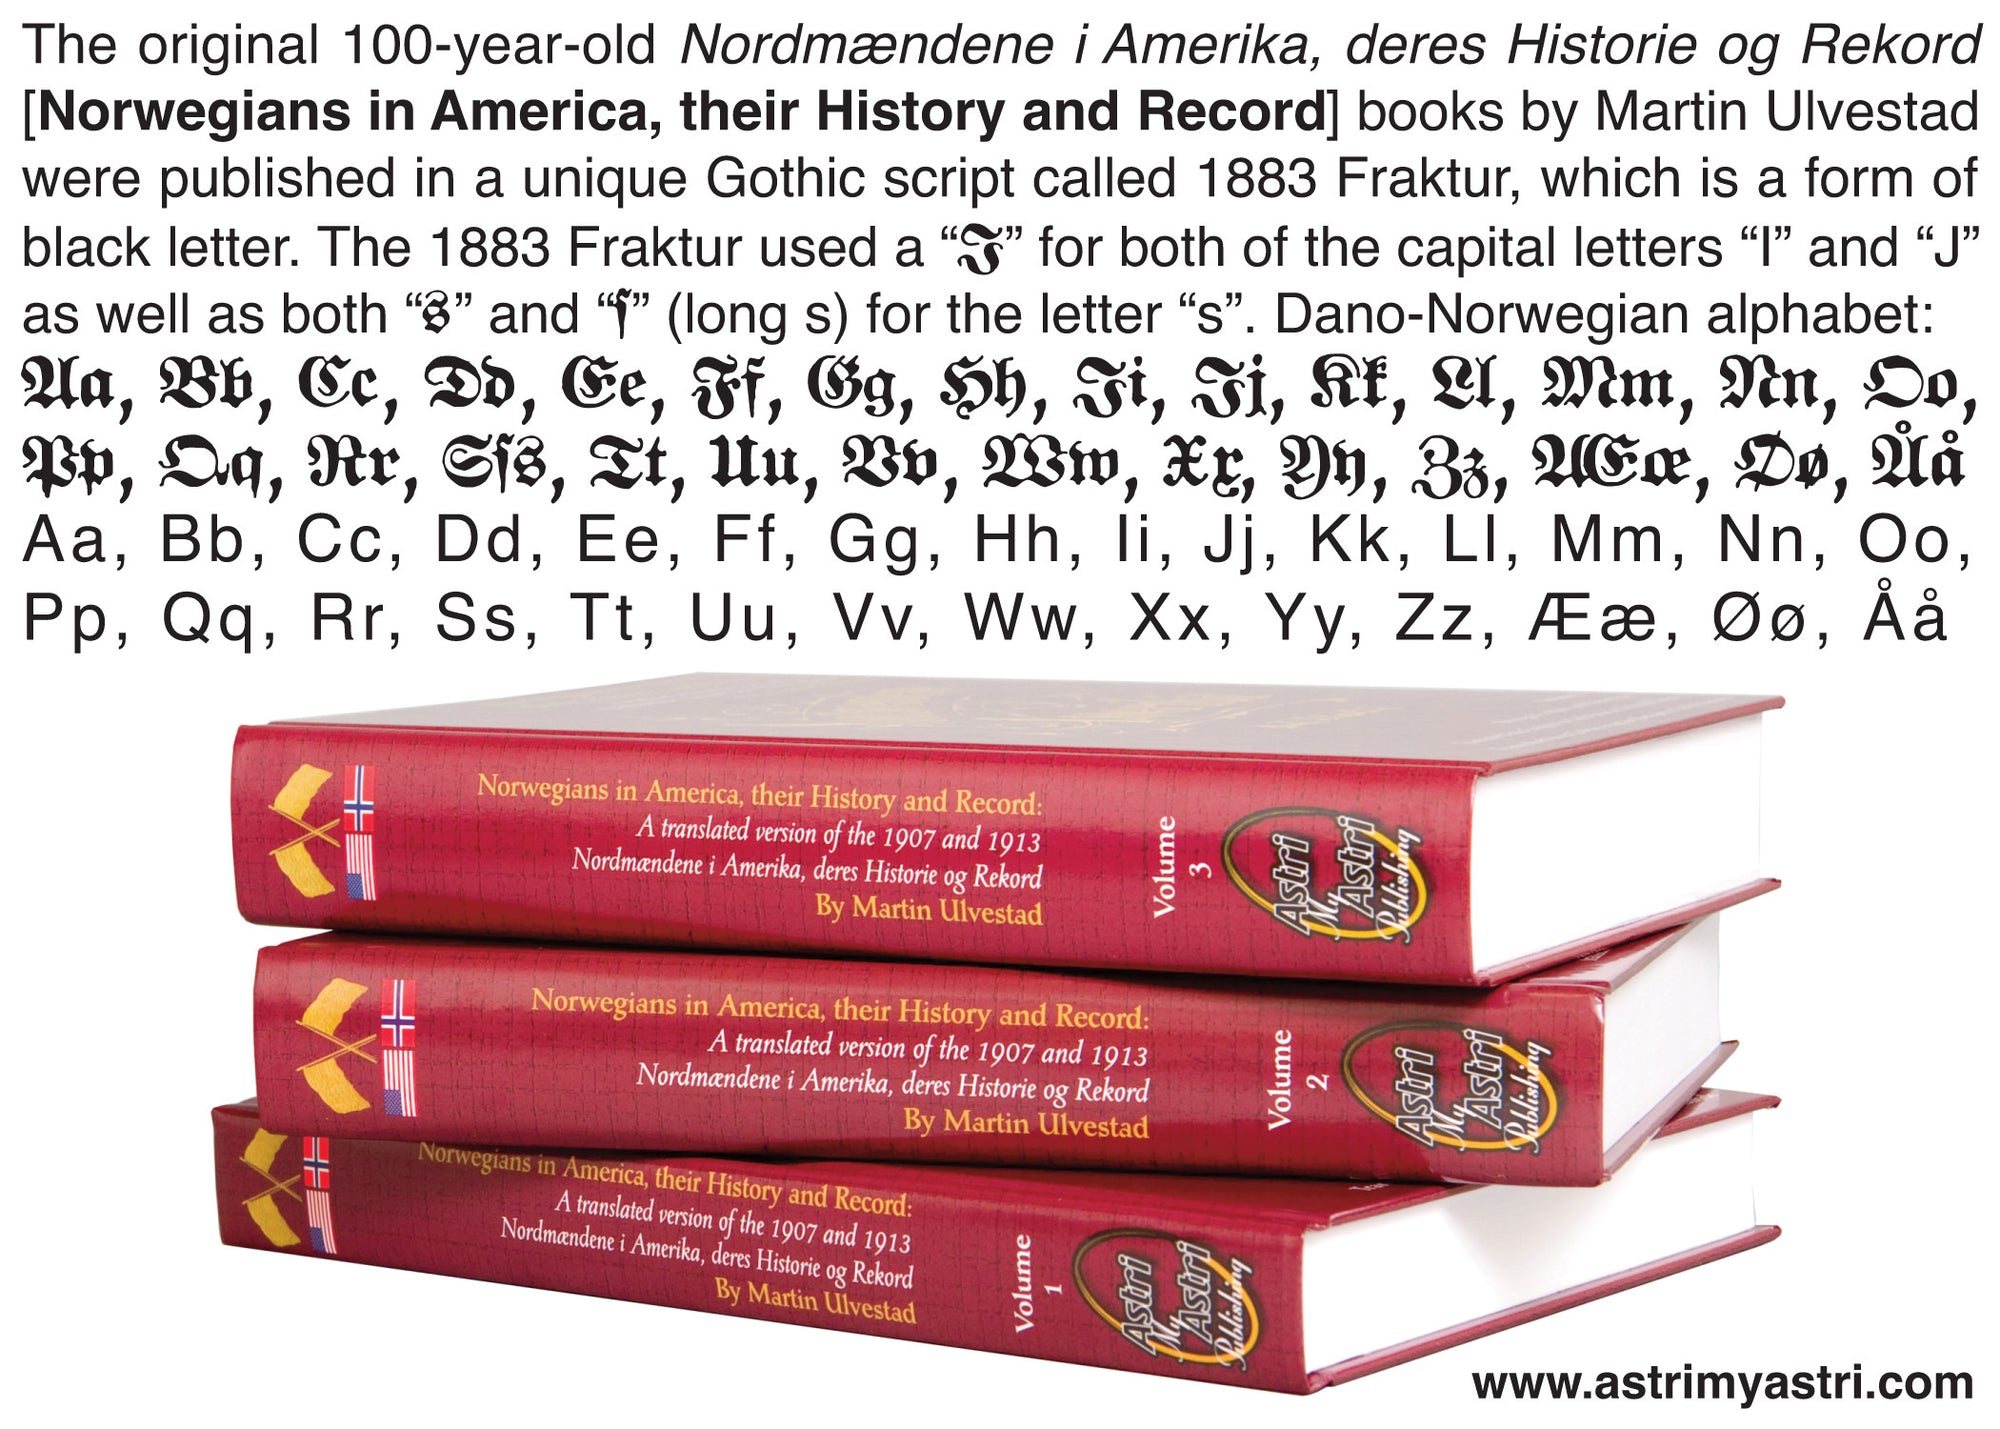 Norwegians in America (1825-1913) Gothic Script books now in ENGLISH!